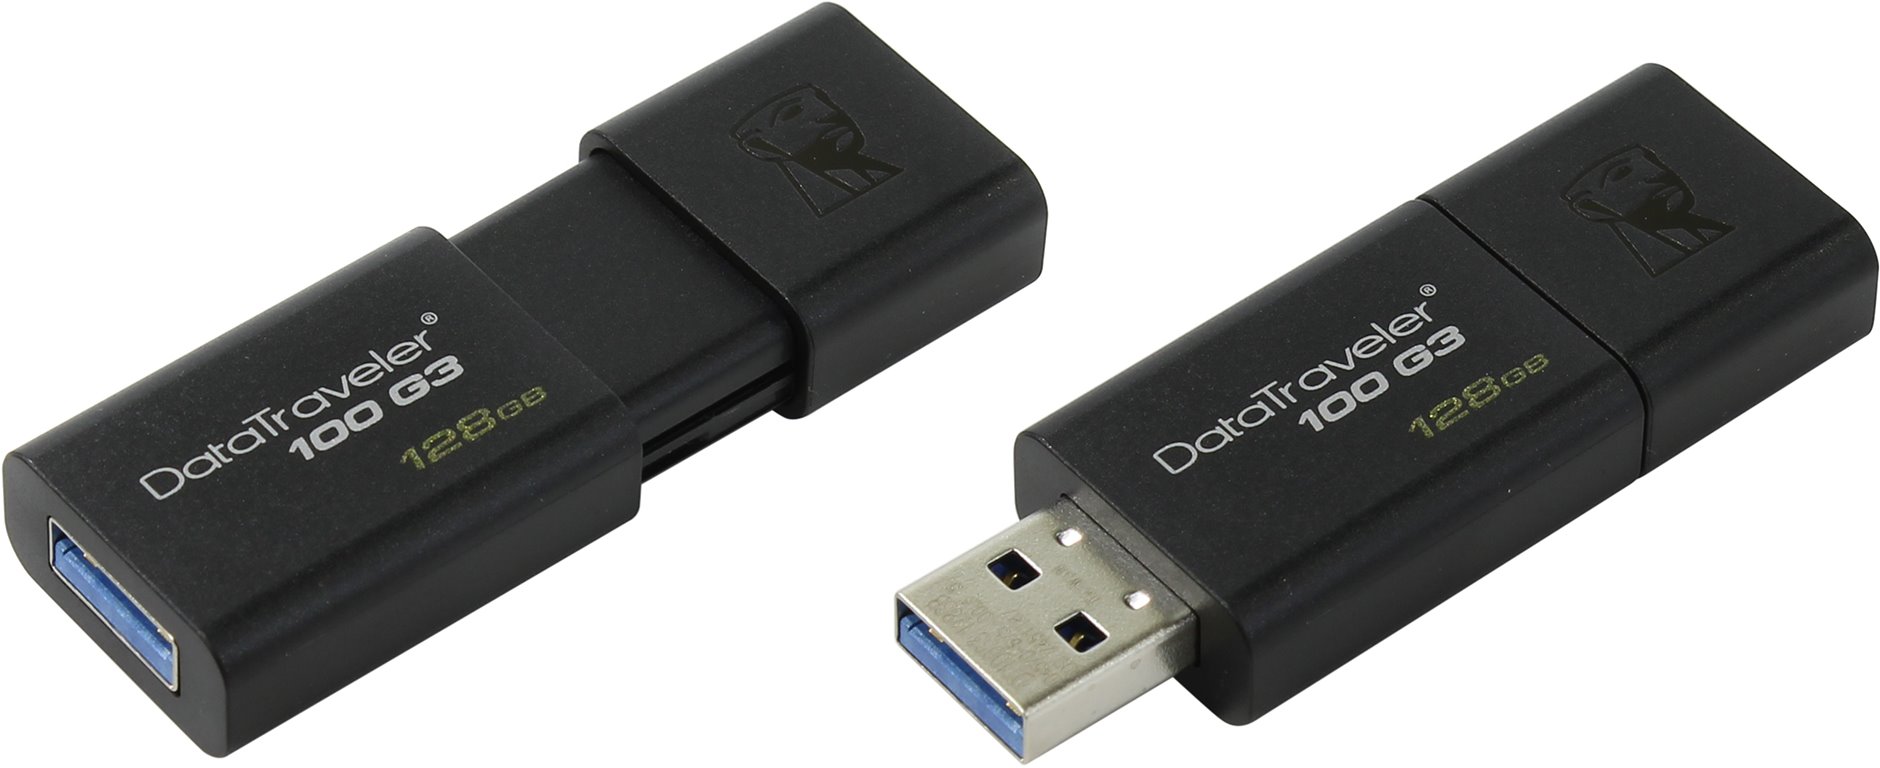 Флэшдрайв 128Gb KINGSTON DataTraveler 100 G3, USB 3.0  (DT100G3/128GB)